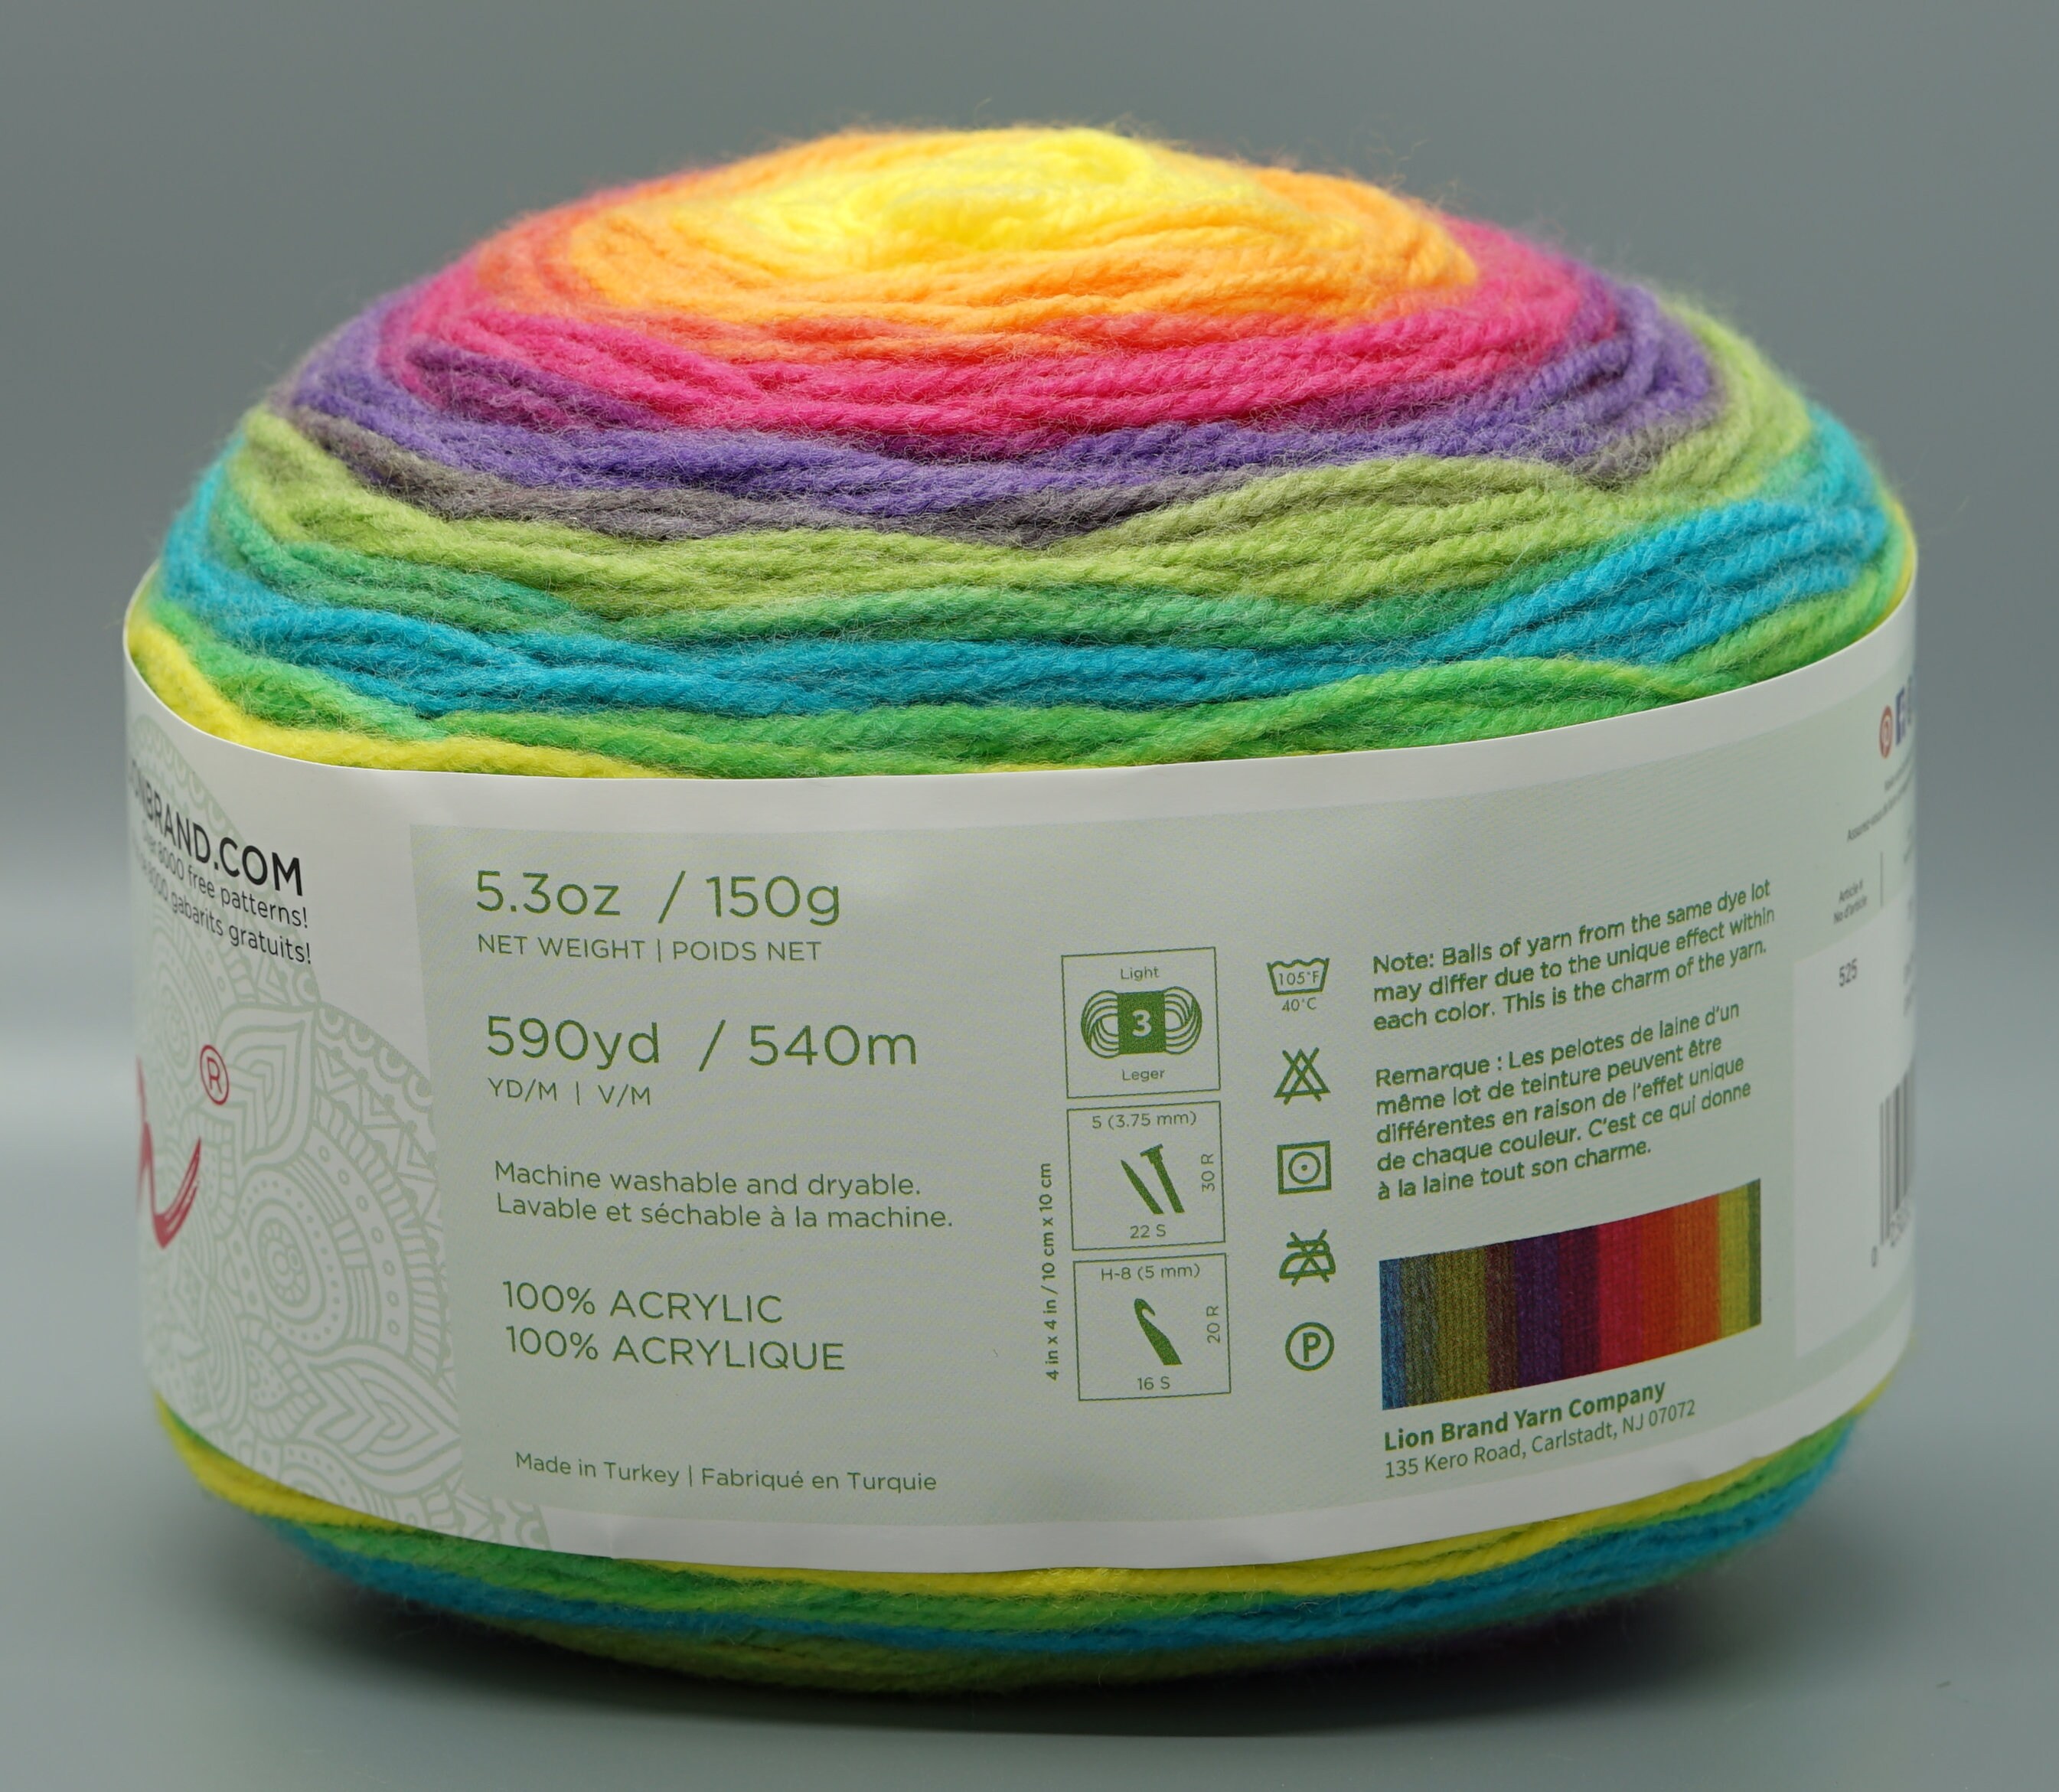 Mandala® Roving Yarn - Discontinued – Lion Brand Yarn